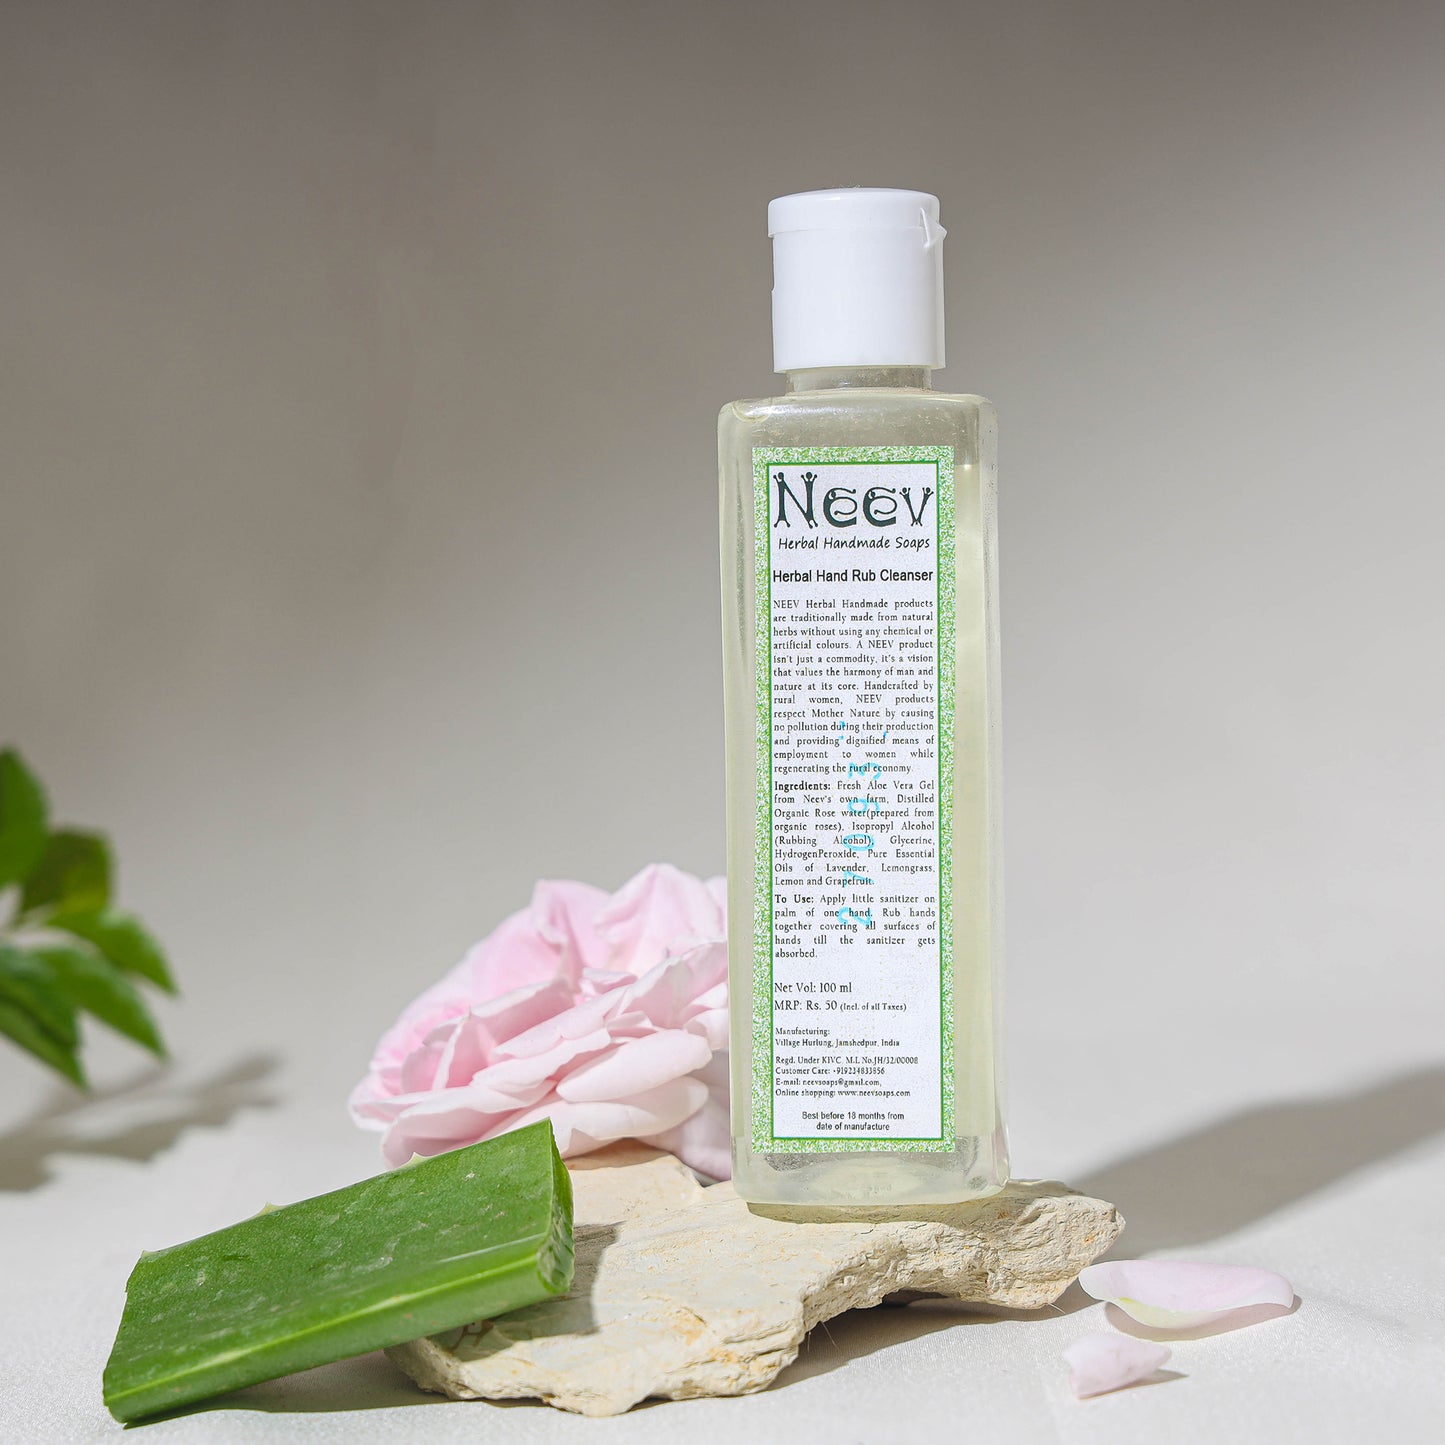 Natural Handmade Herbal Hand Sanitizer Aloe Vera & Rose Water Spray